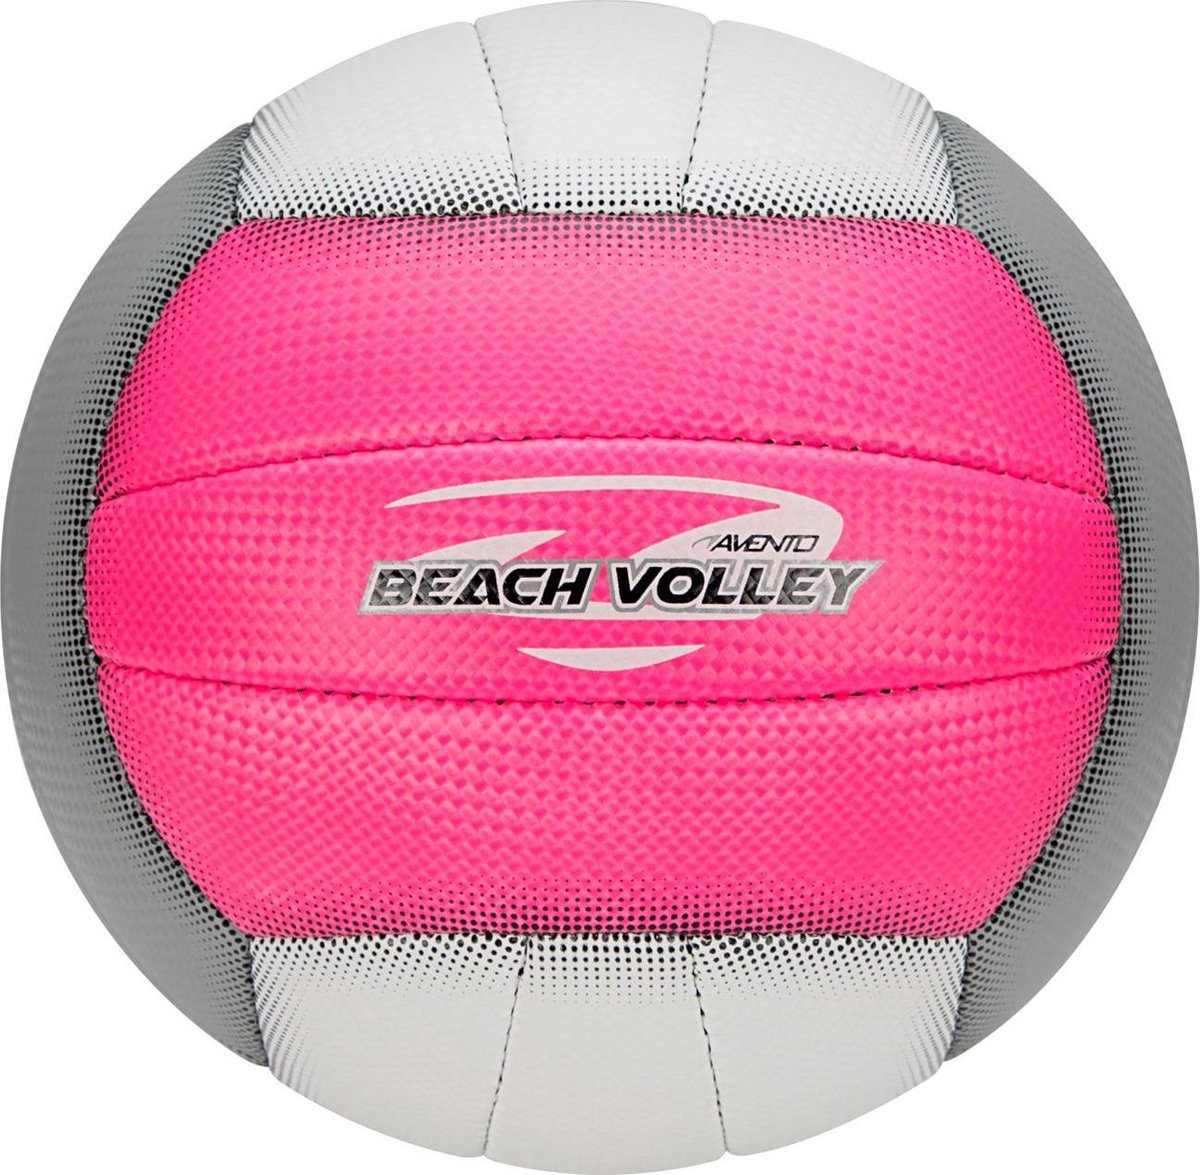 Billede af Avento Beach Volleyball Pink/Grå/Hvid - Beachvolleyball i standard størrelse - HURTIG LEVERING